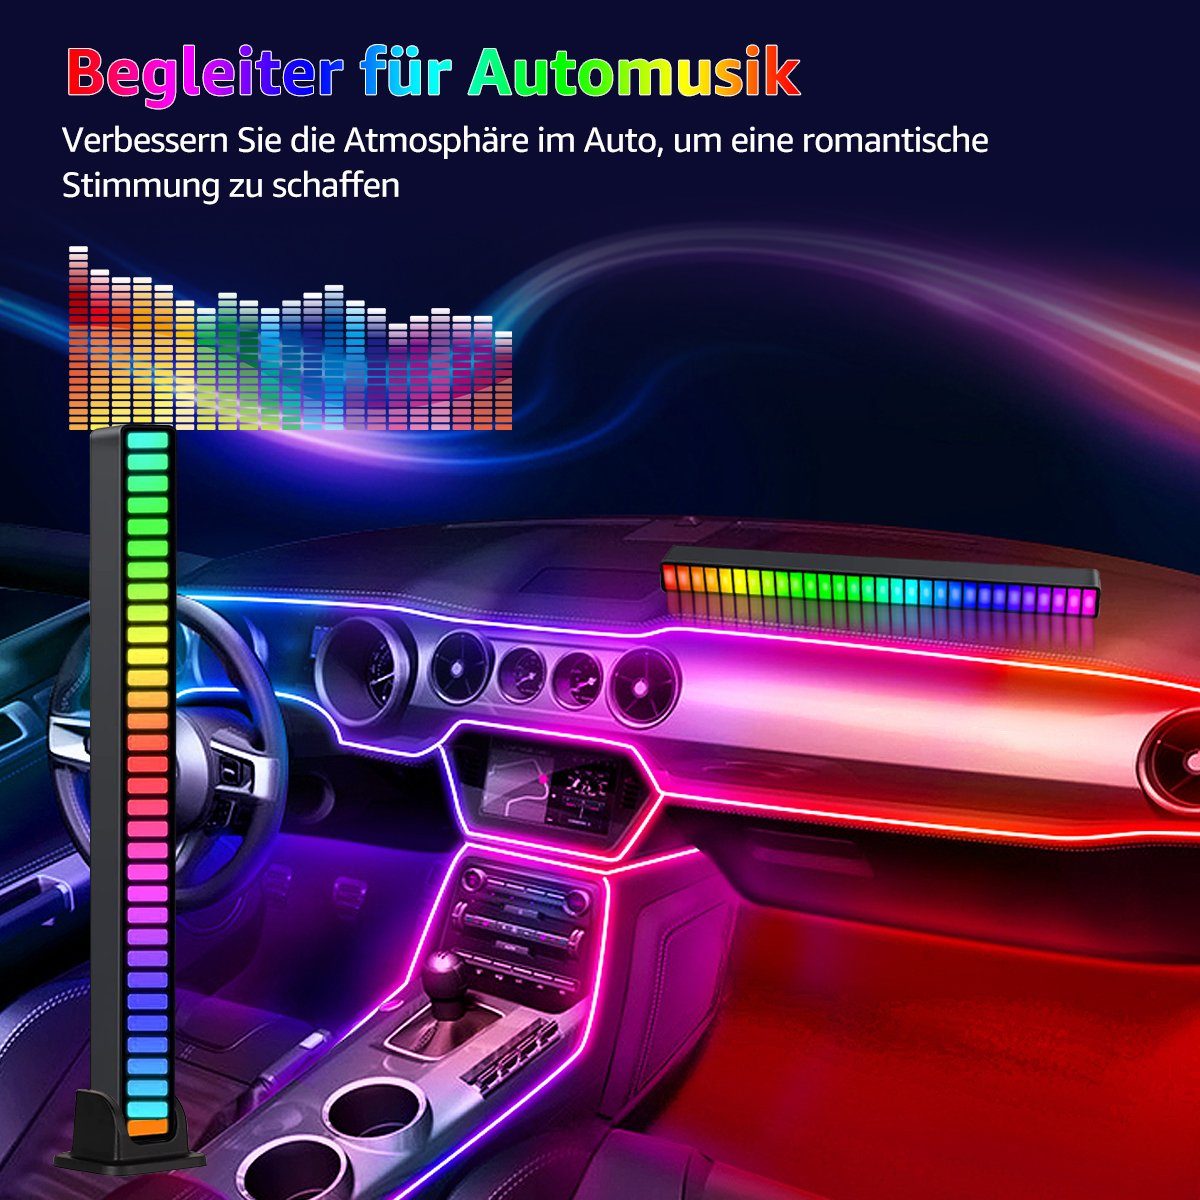 7Magic LED Stripe USB LED Musik 32-flammig, Rhythmus LED Lamp, Weihnachten RGB Lampe, Lichtleiste, Umgebungslichter